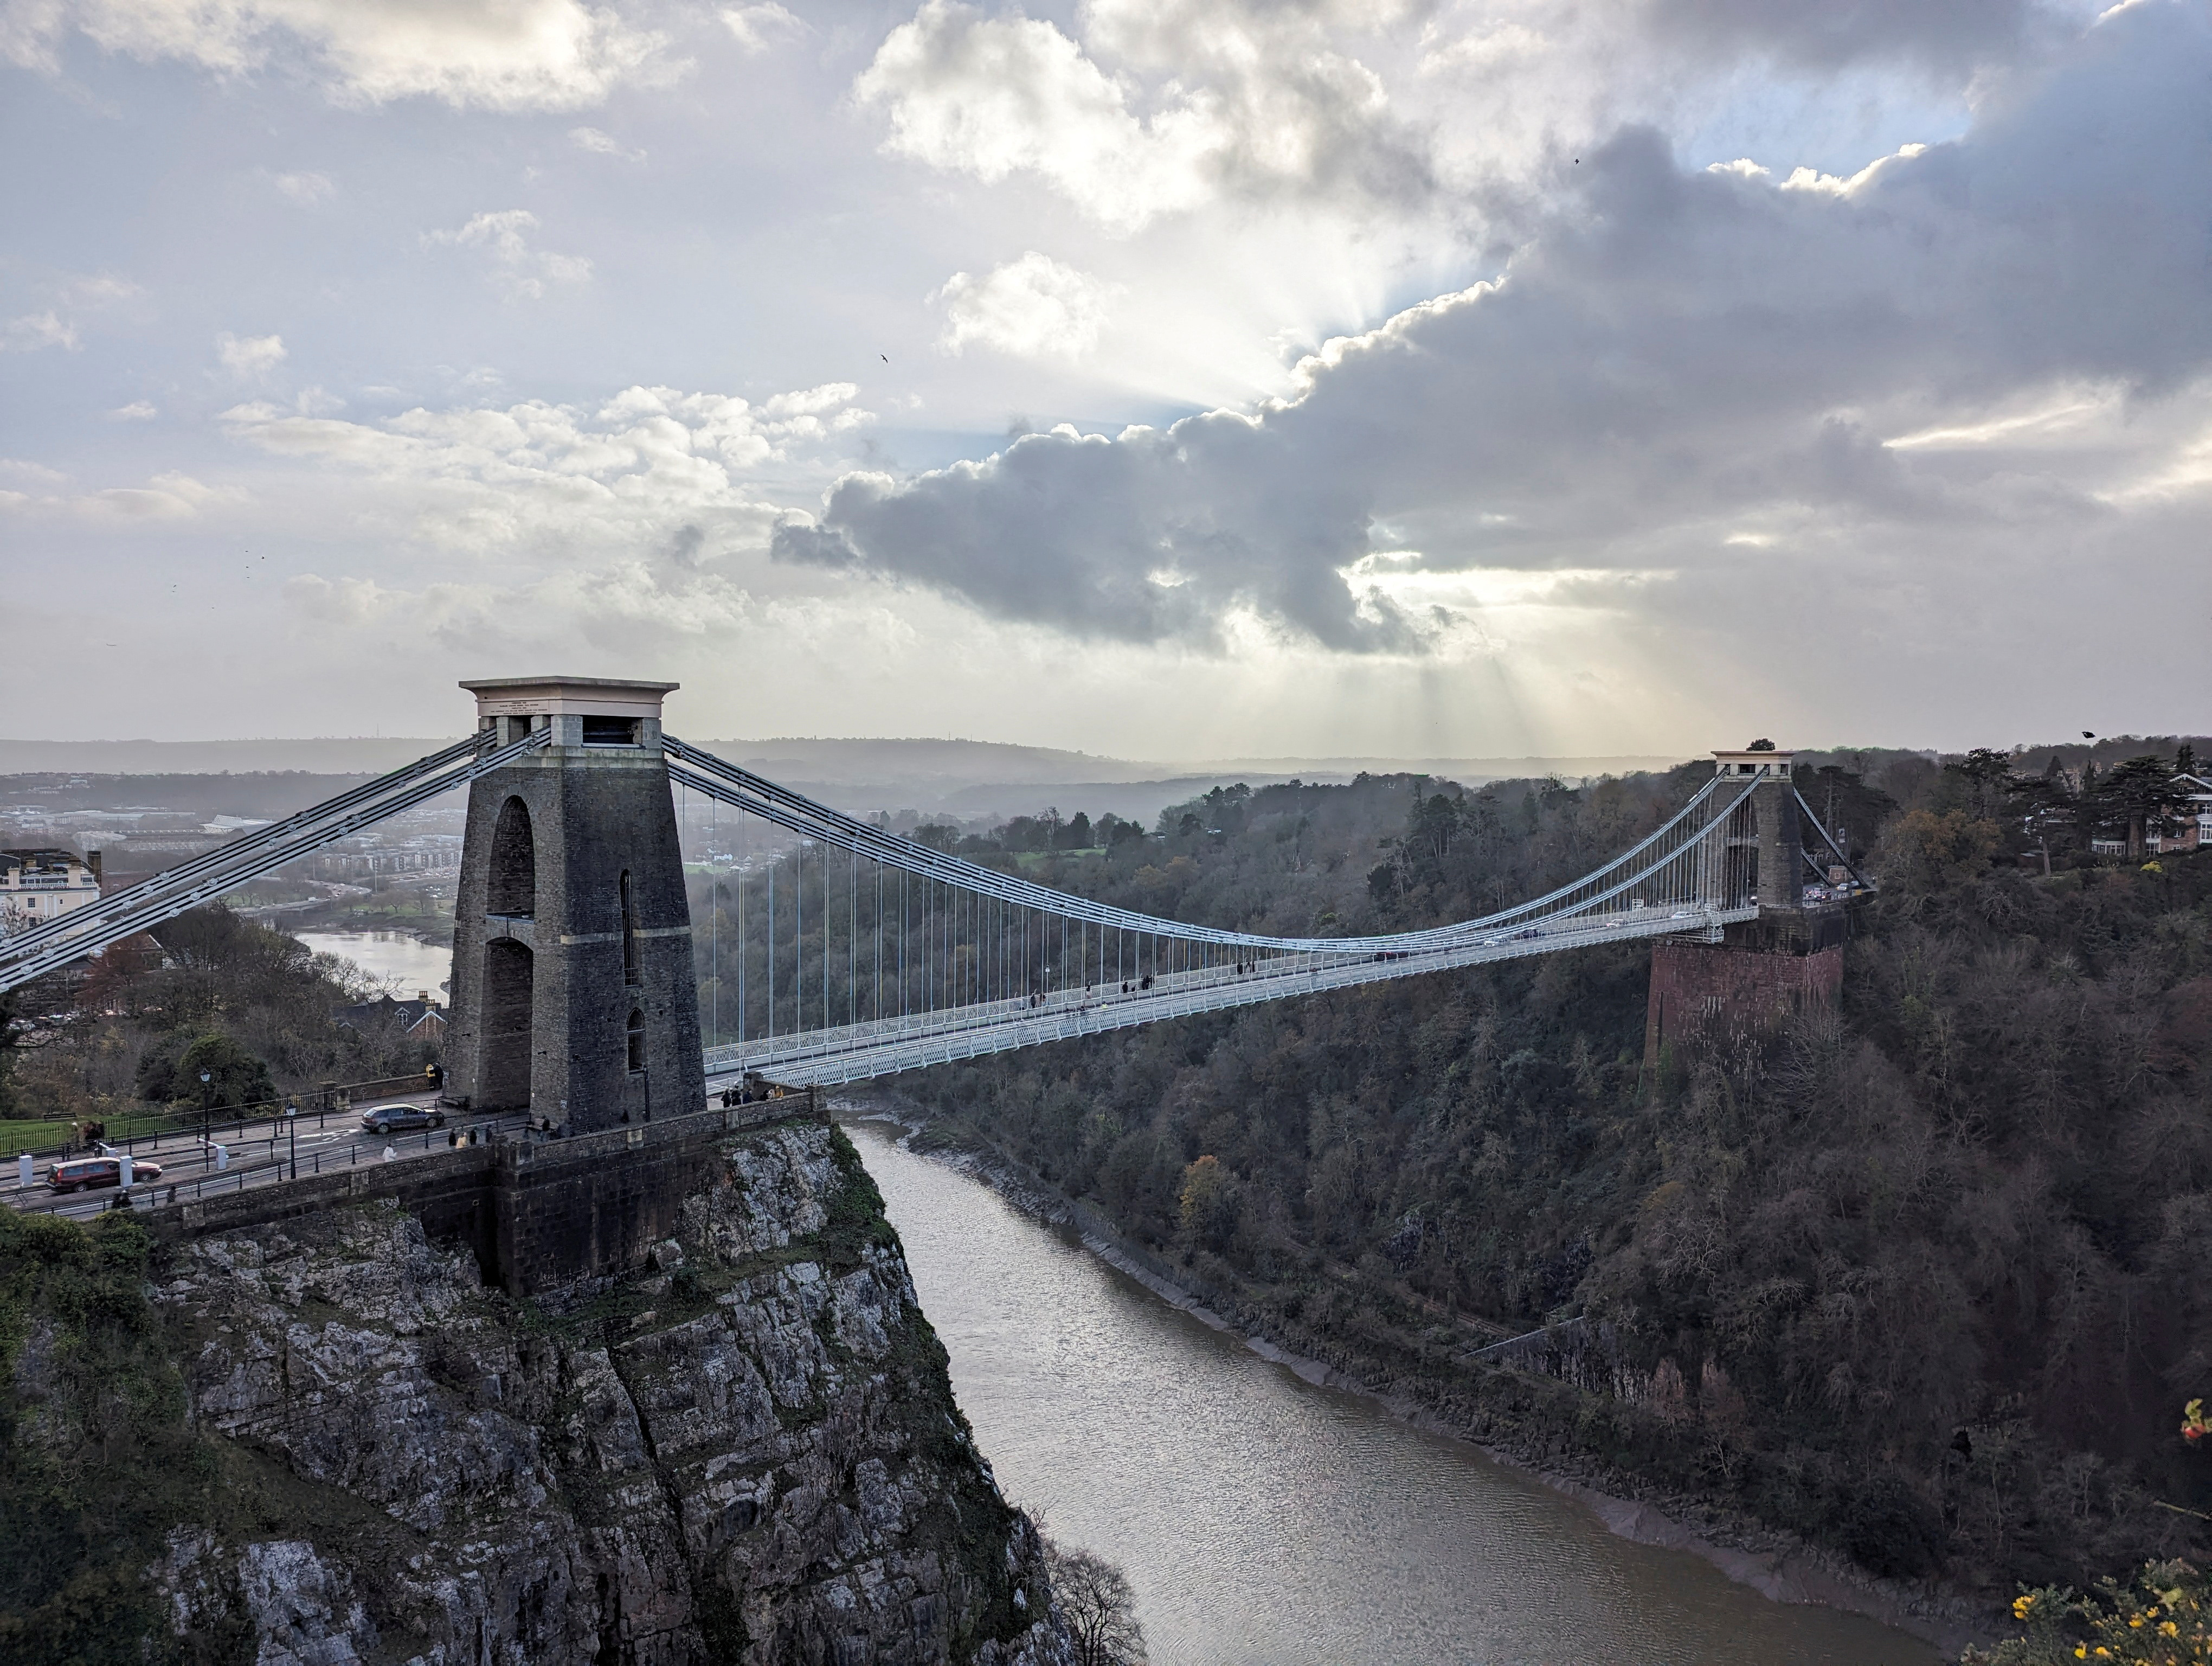 View of the Clifton Suspension Bridge in Bristol